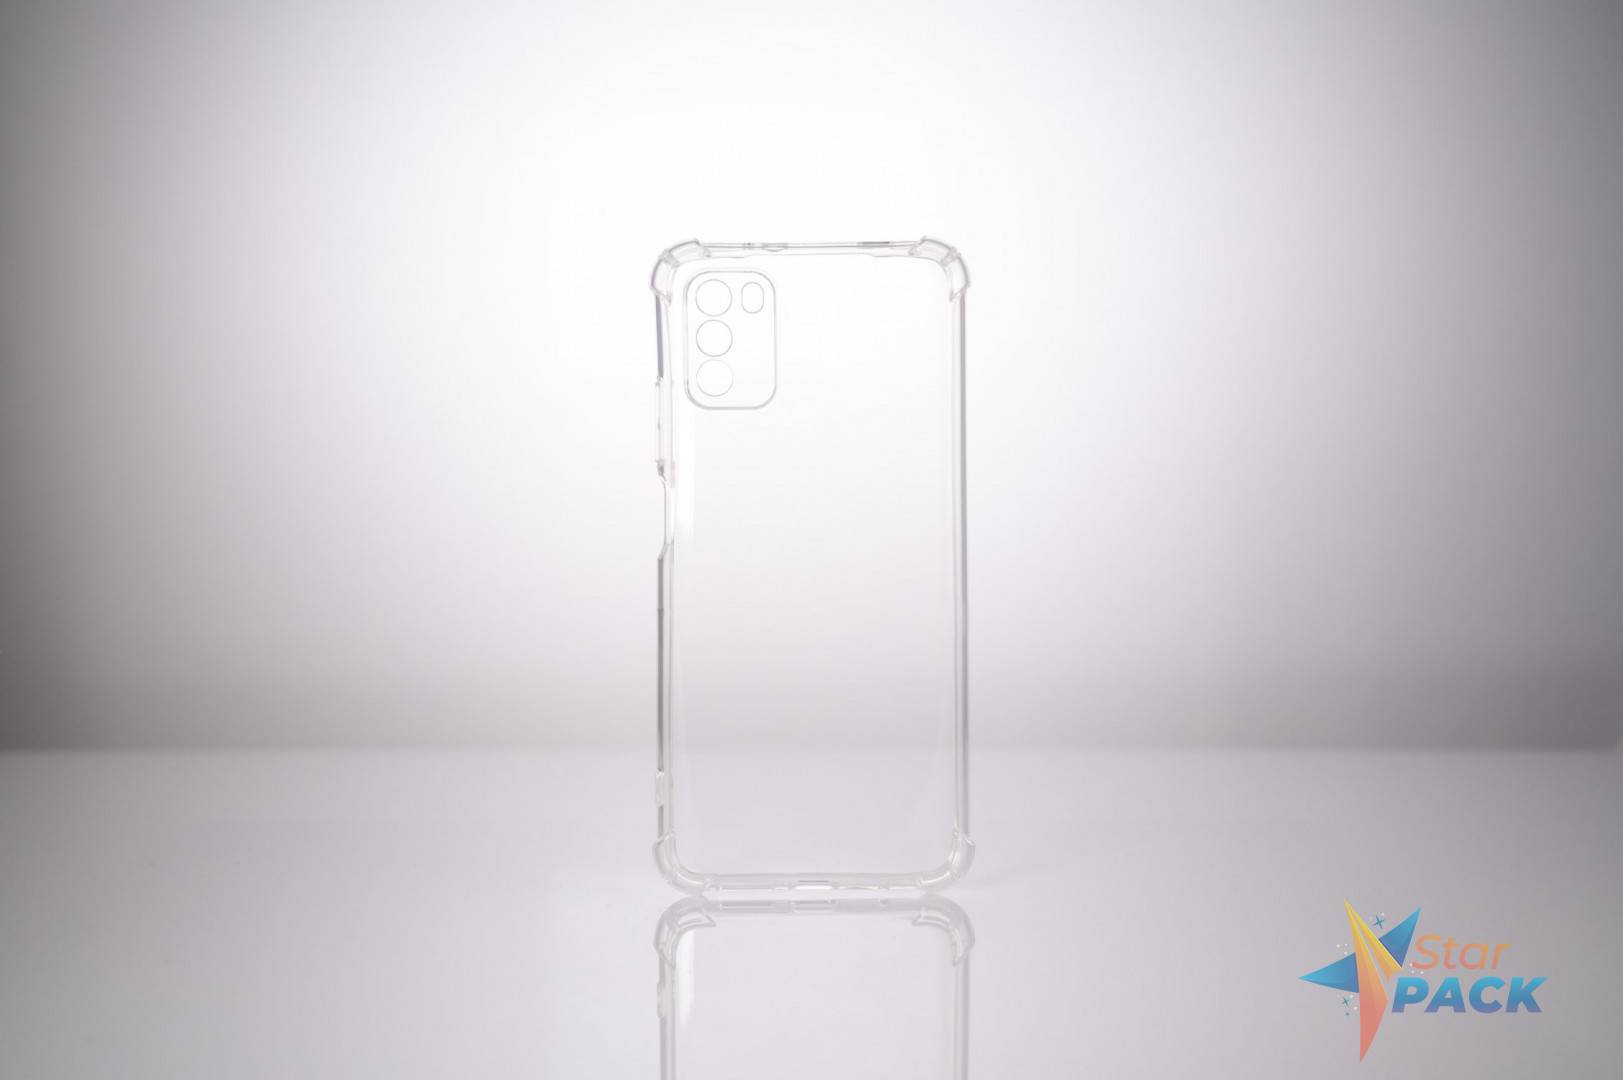 Husa Xiaomi Pocophone M3 Spacer, transparenta,  grosime 1.5mm, protectie suplimentara antisoc la colturi, material flexibil TPU S